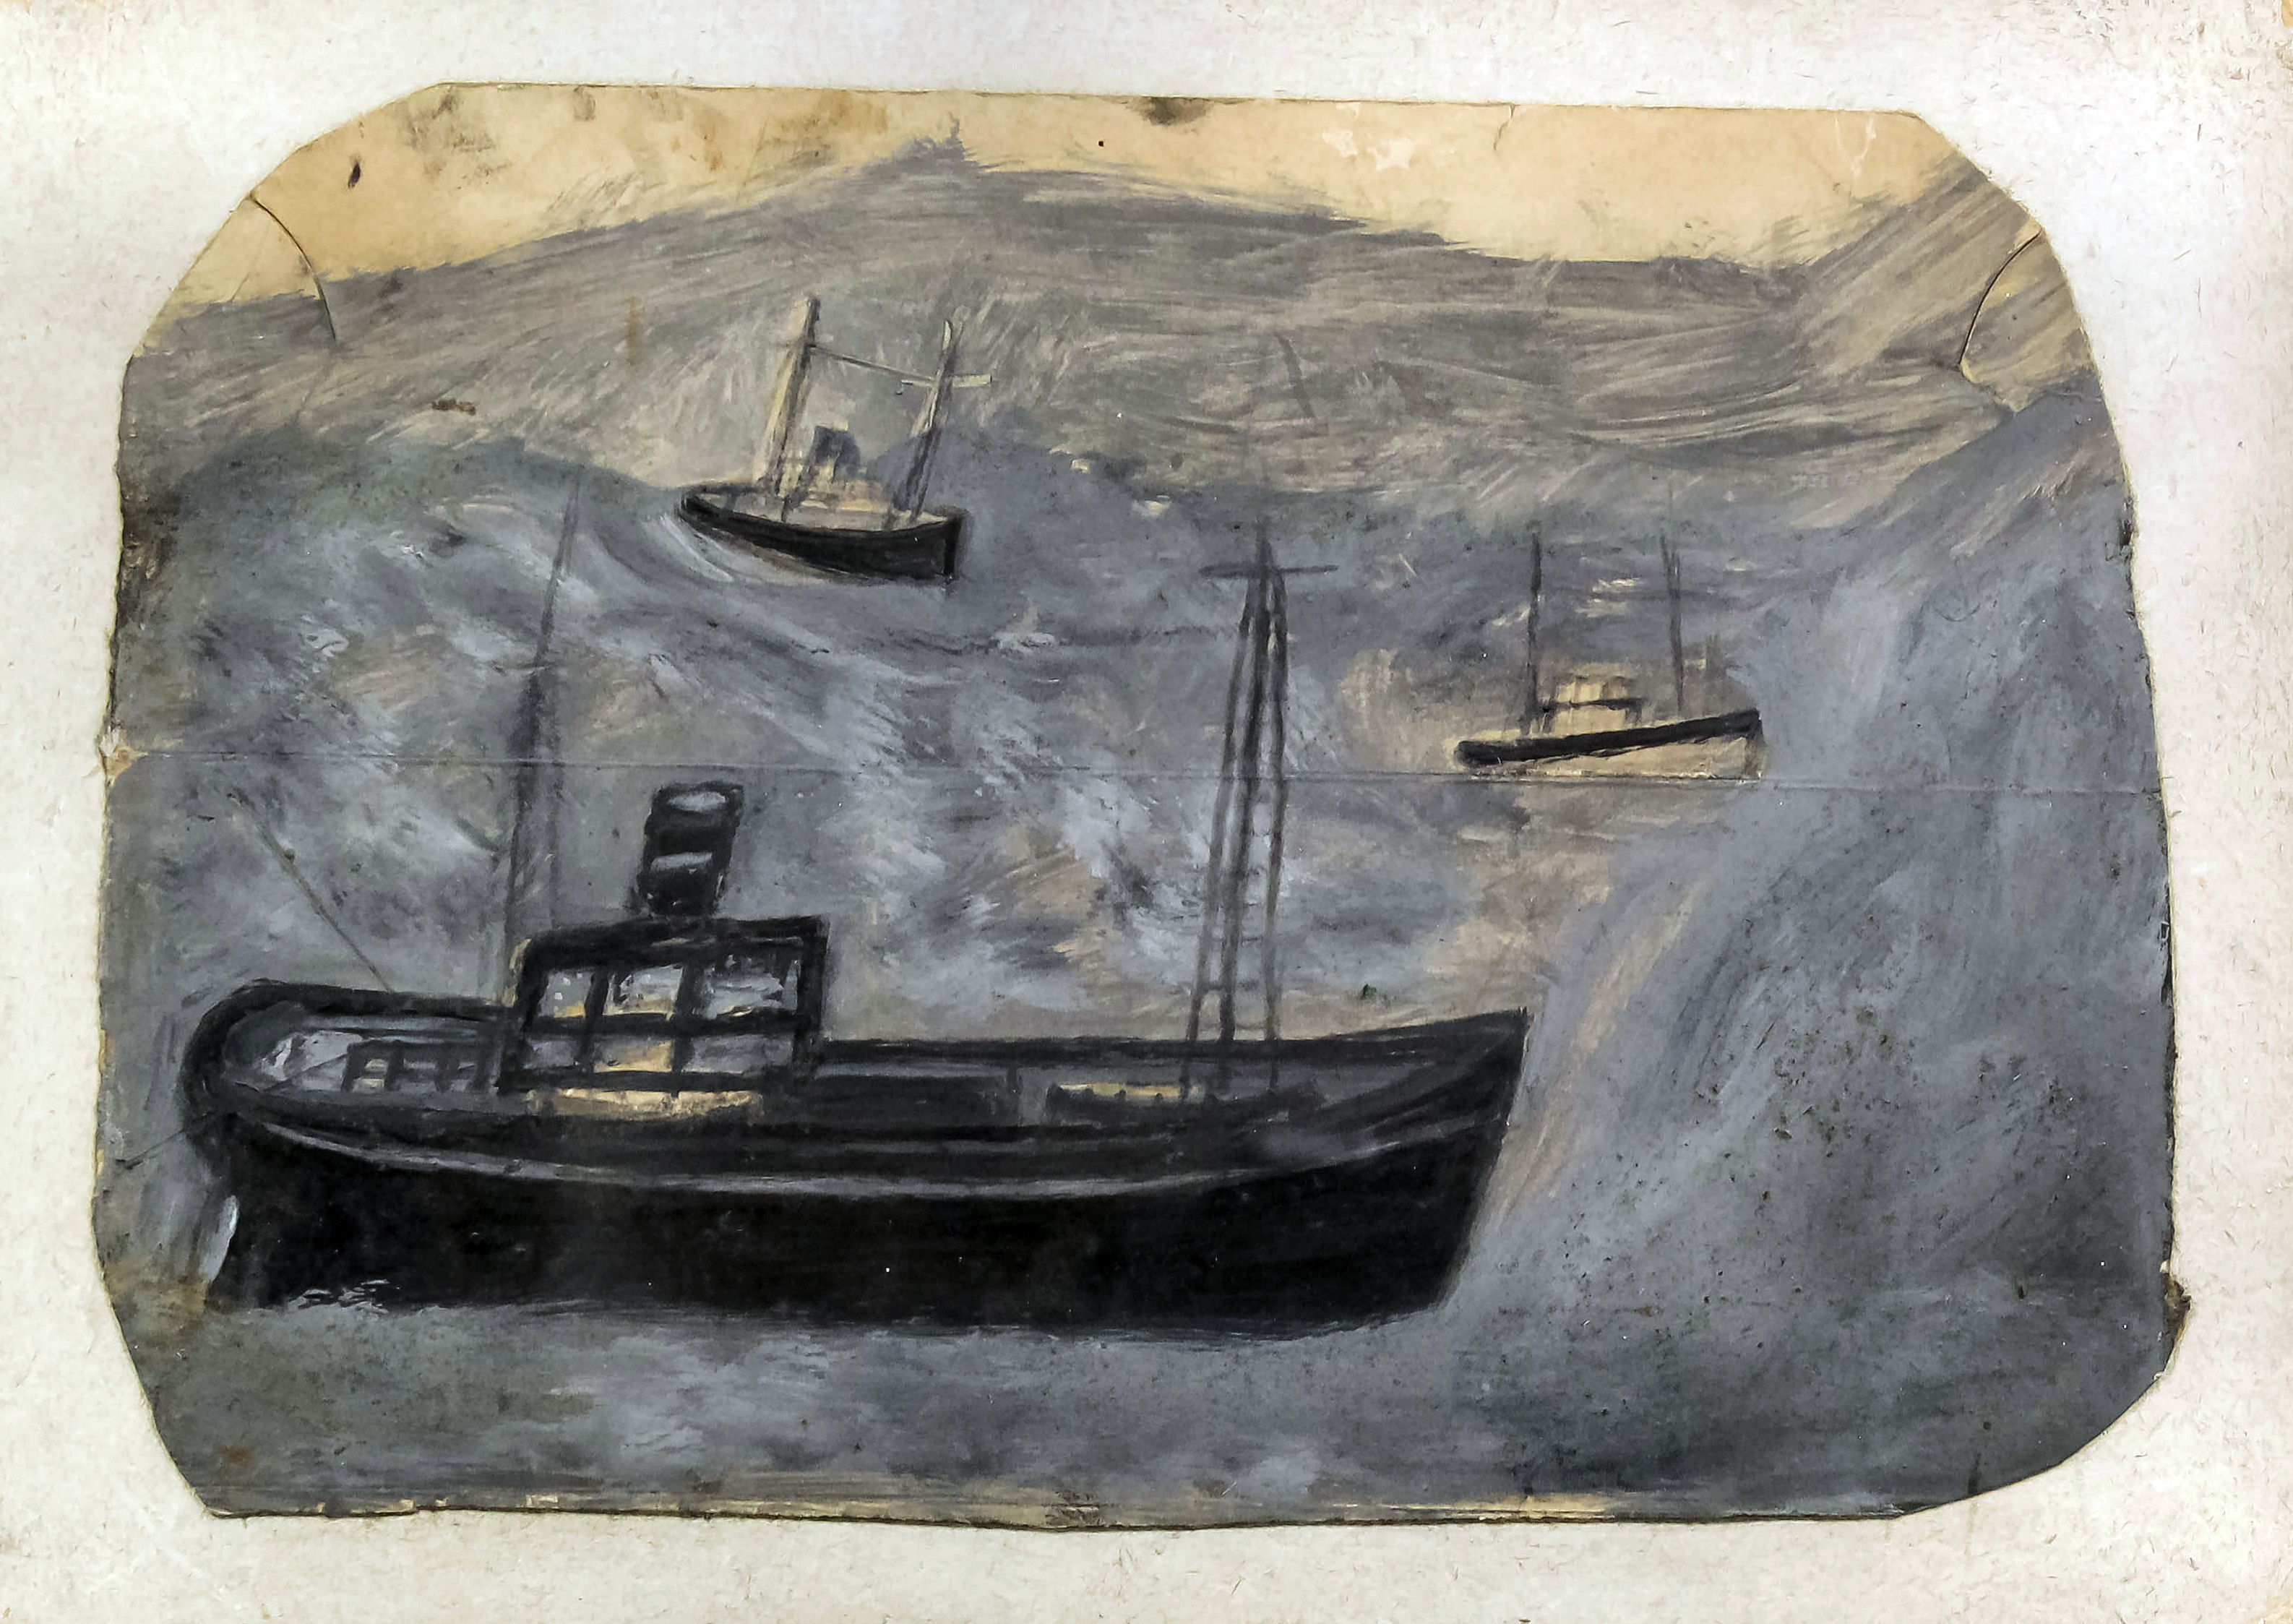 Alfred Wallis (1855-1942) - Oil painting - "Trawlers", cardboard 6.125ins x 9ins, in oak box frame